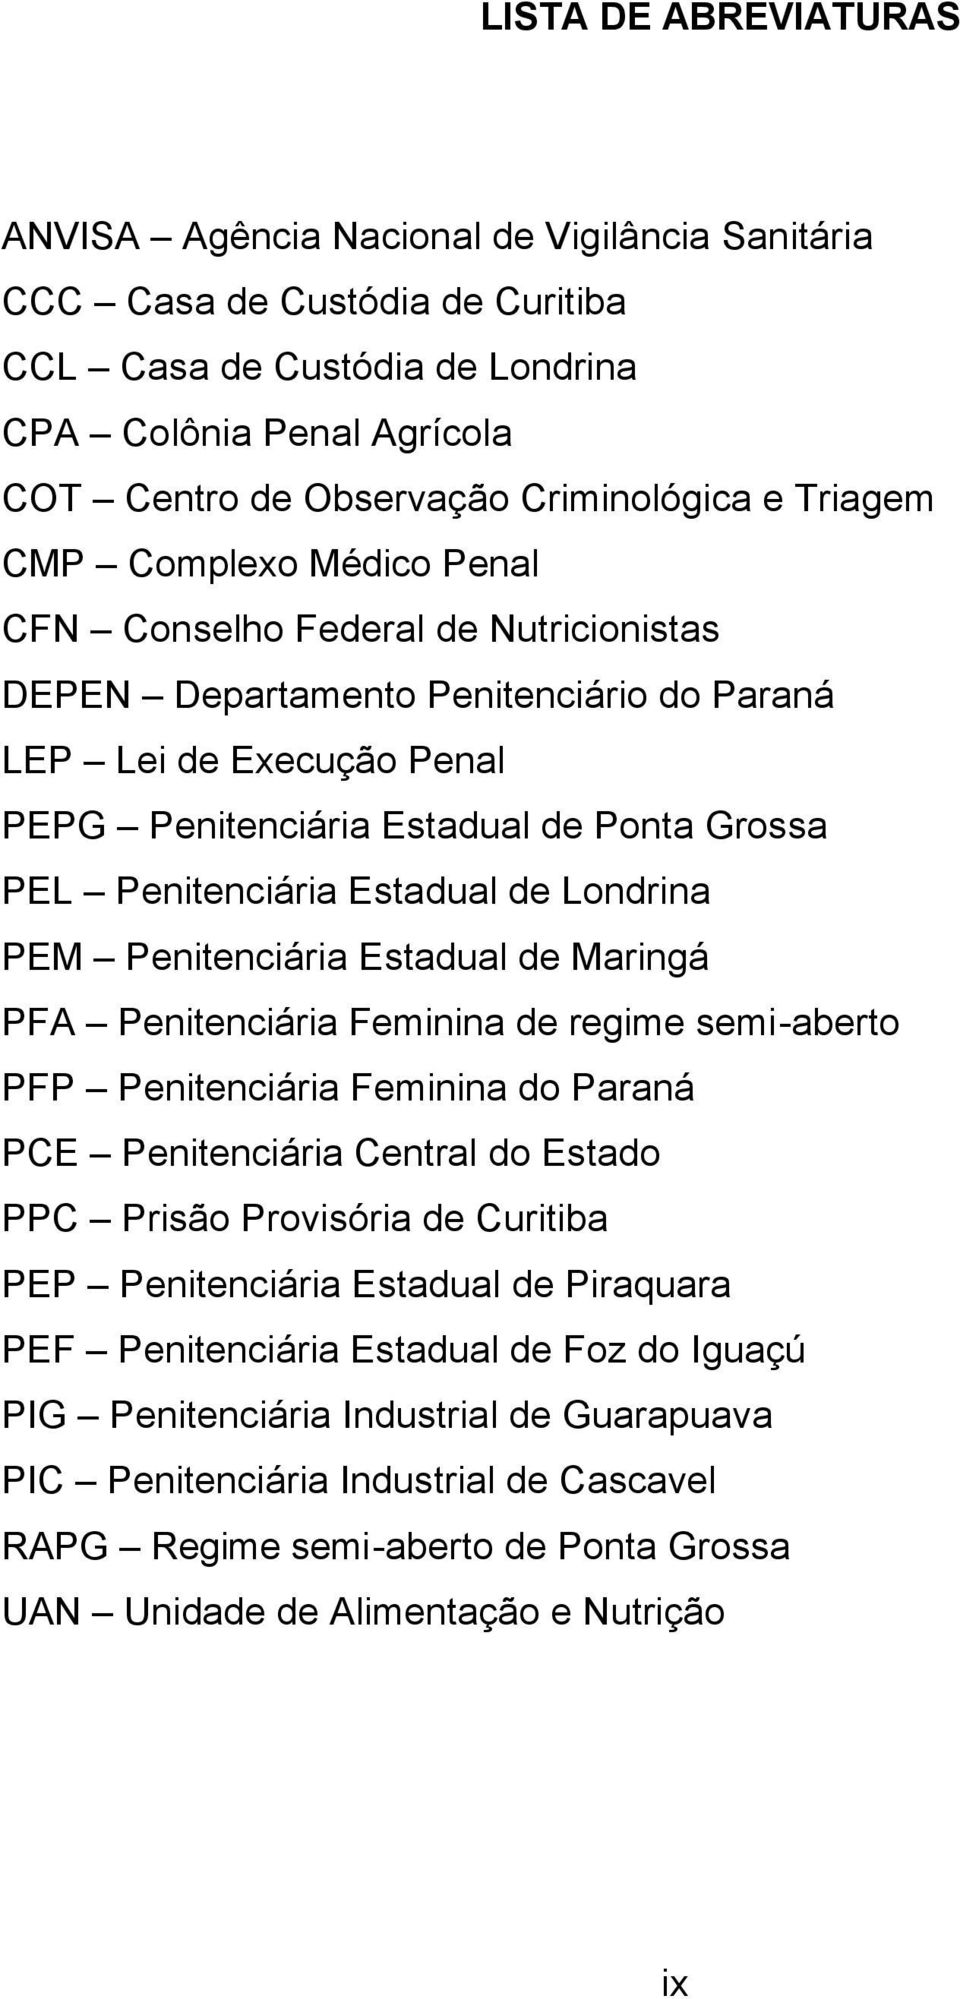 Grossa PEL Penitenciária Estadual de Londrina PEM Penitenciária Estadual de Maringá PFA Penitenciária Feminina de regime semi-aberto PFP Penitenciária Feminina do Paraná PCE Penitenciária Central do